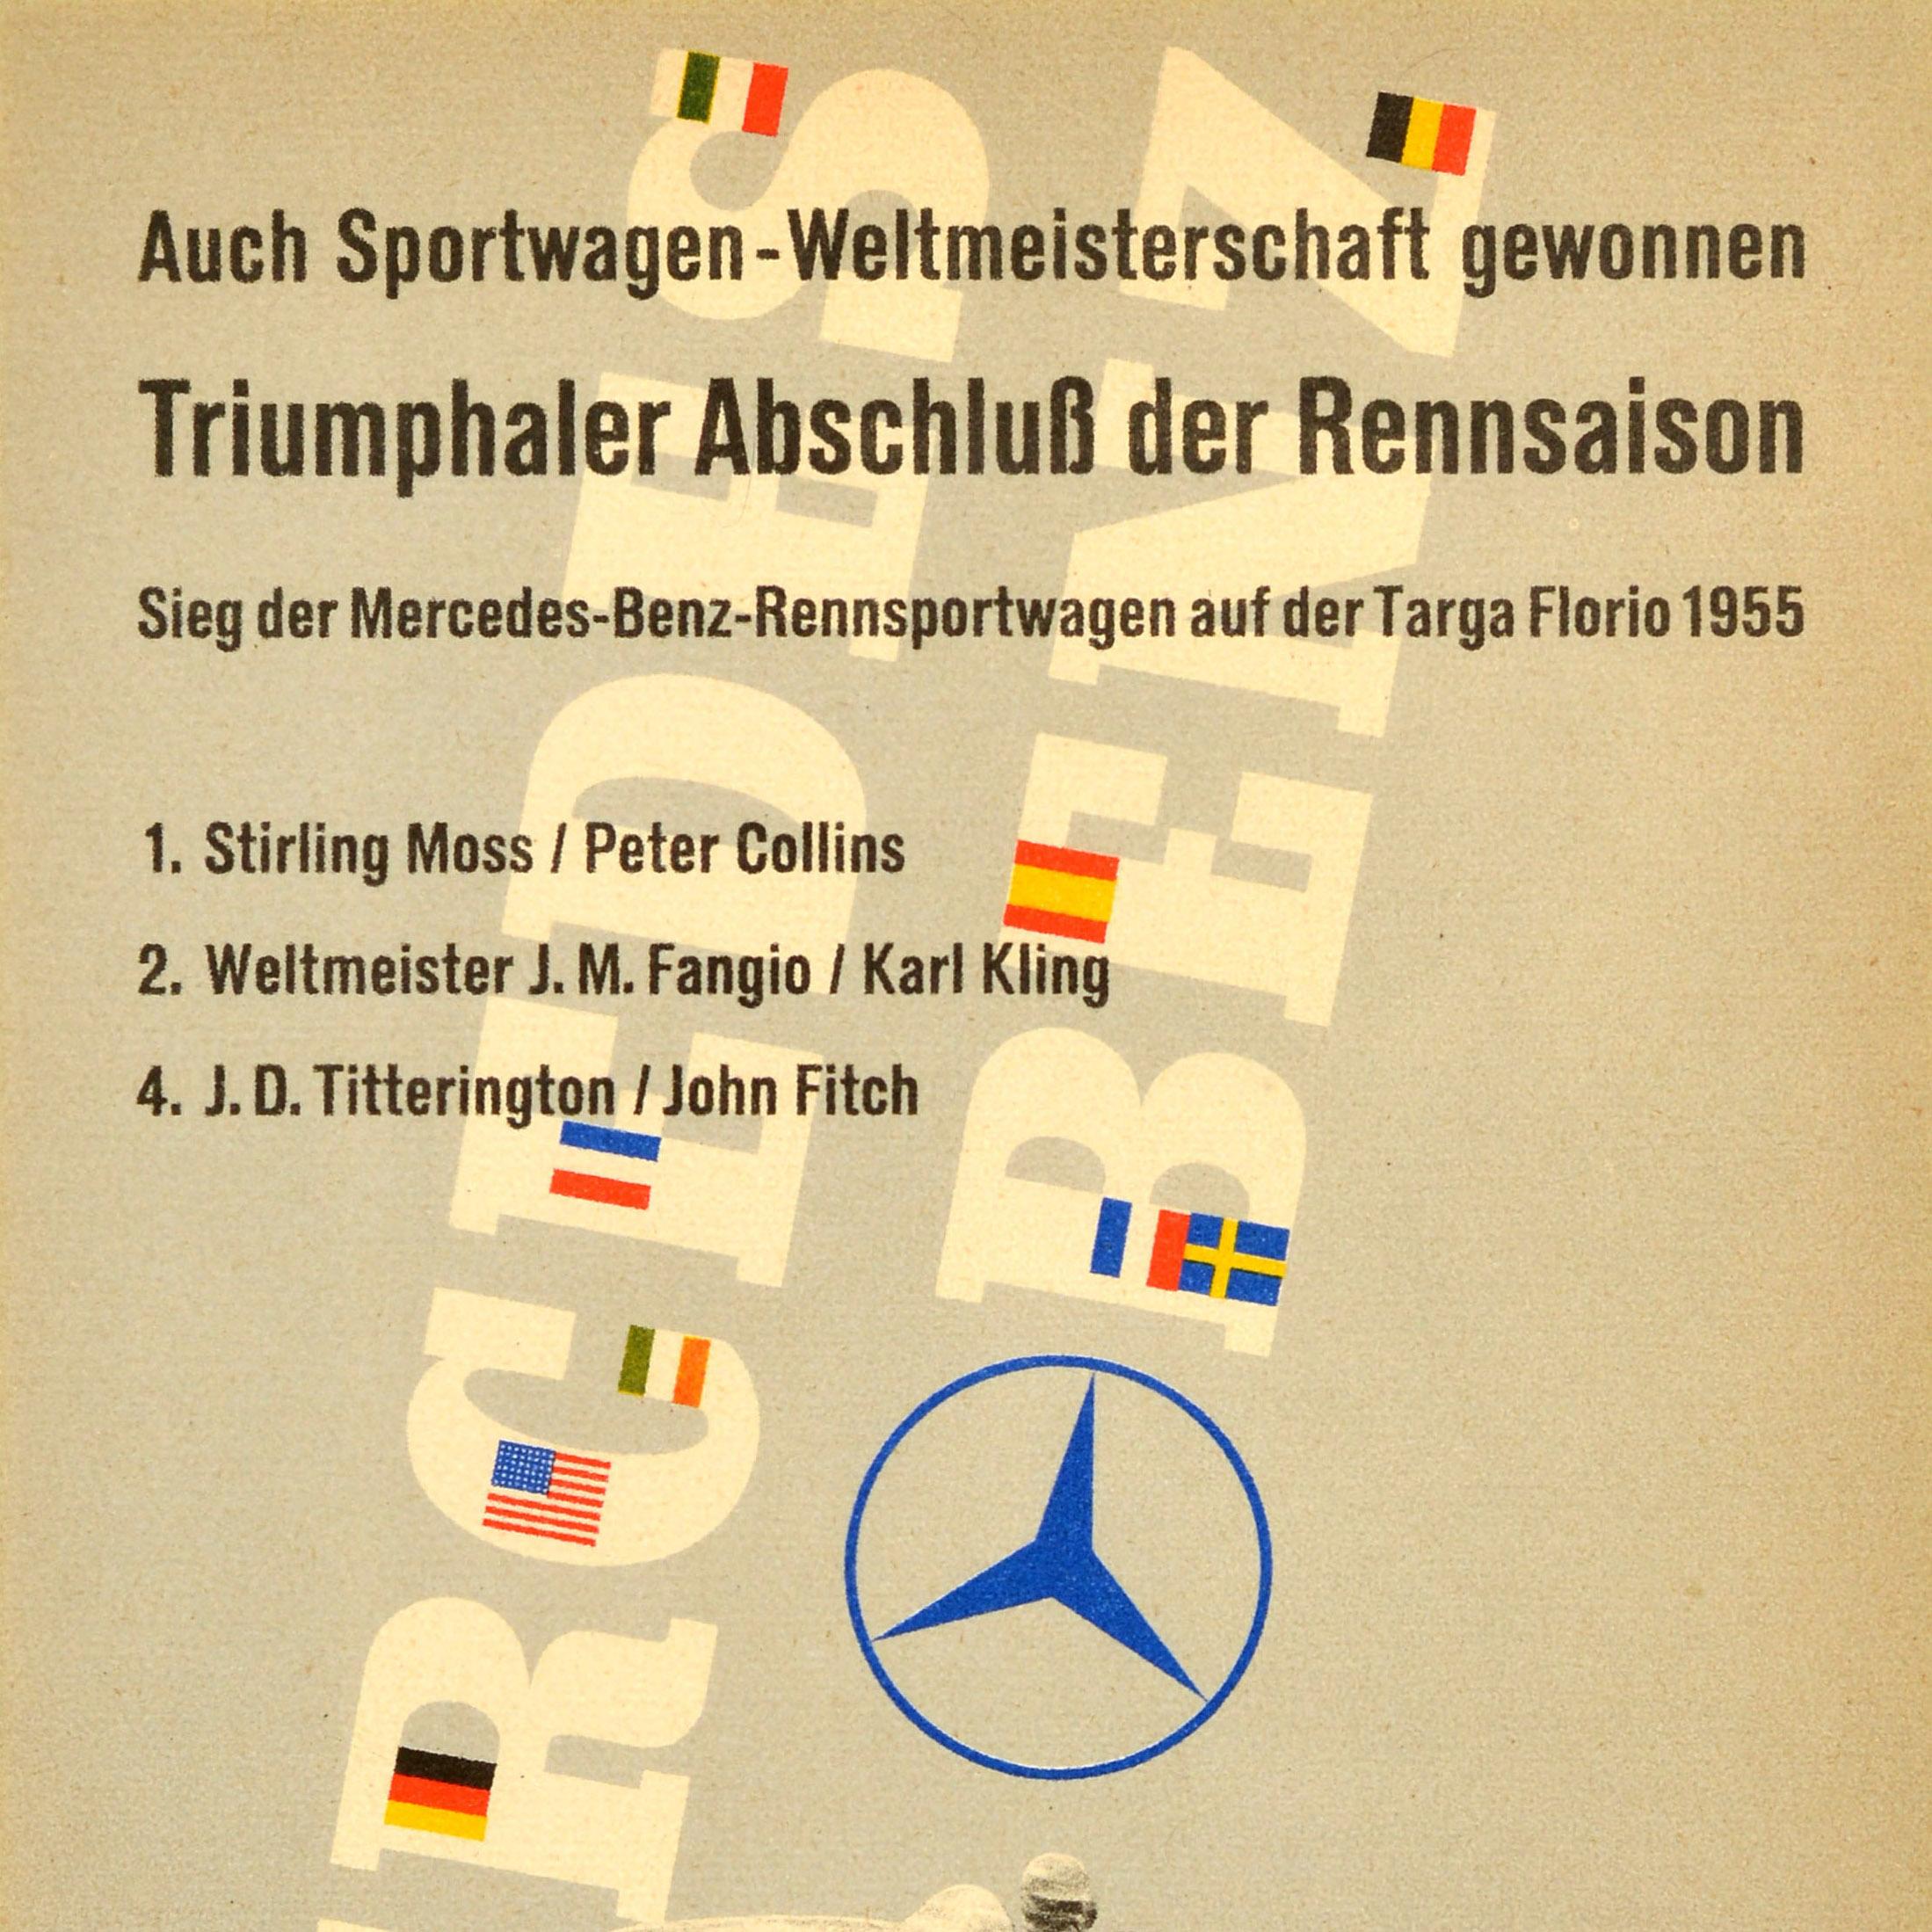 Original vintage Mercedes Benz poster published to celebrate the motorsport victory of its drivers during the 1955 season - Auch Sportwagen-Weltmeisterschaft gewonnen Triumphaler Abschluss der Rennsaison Sieg der Mercedes-Benz-Rennsportwagen auf der